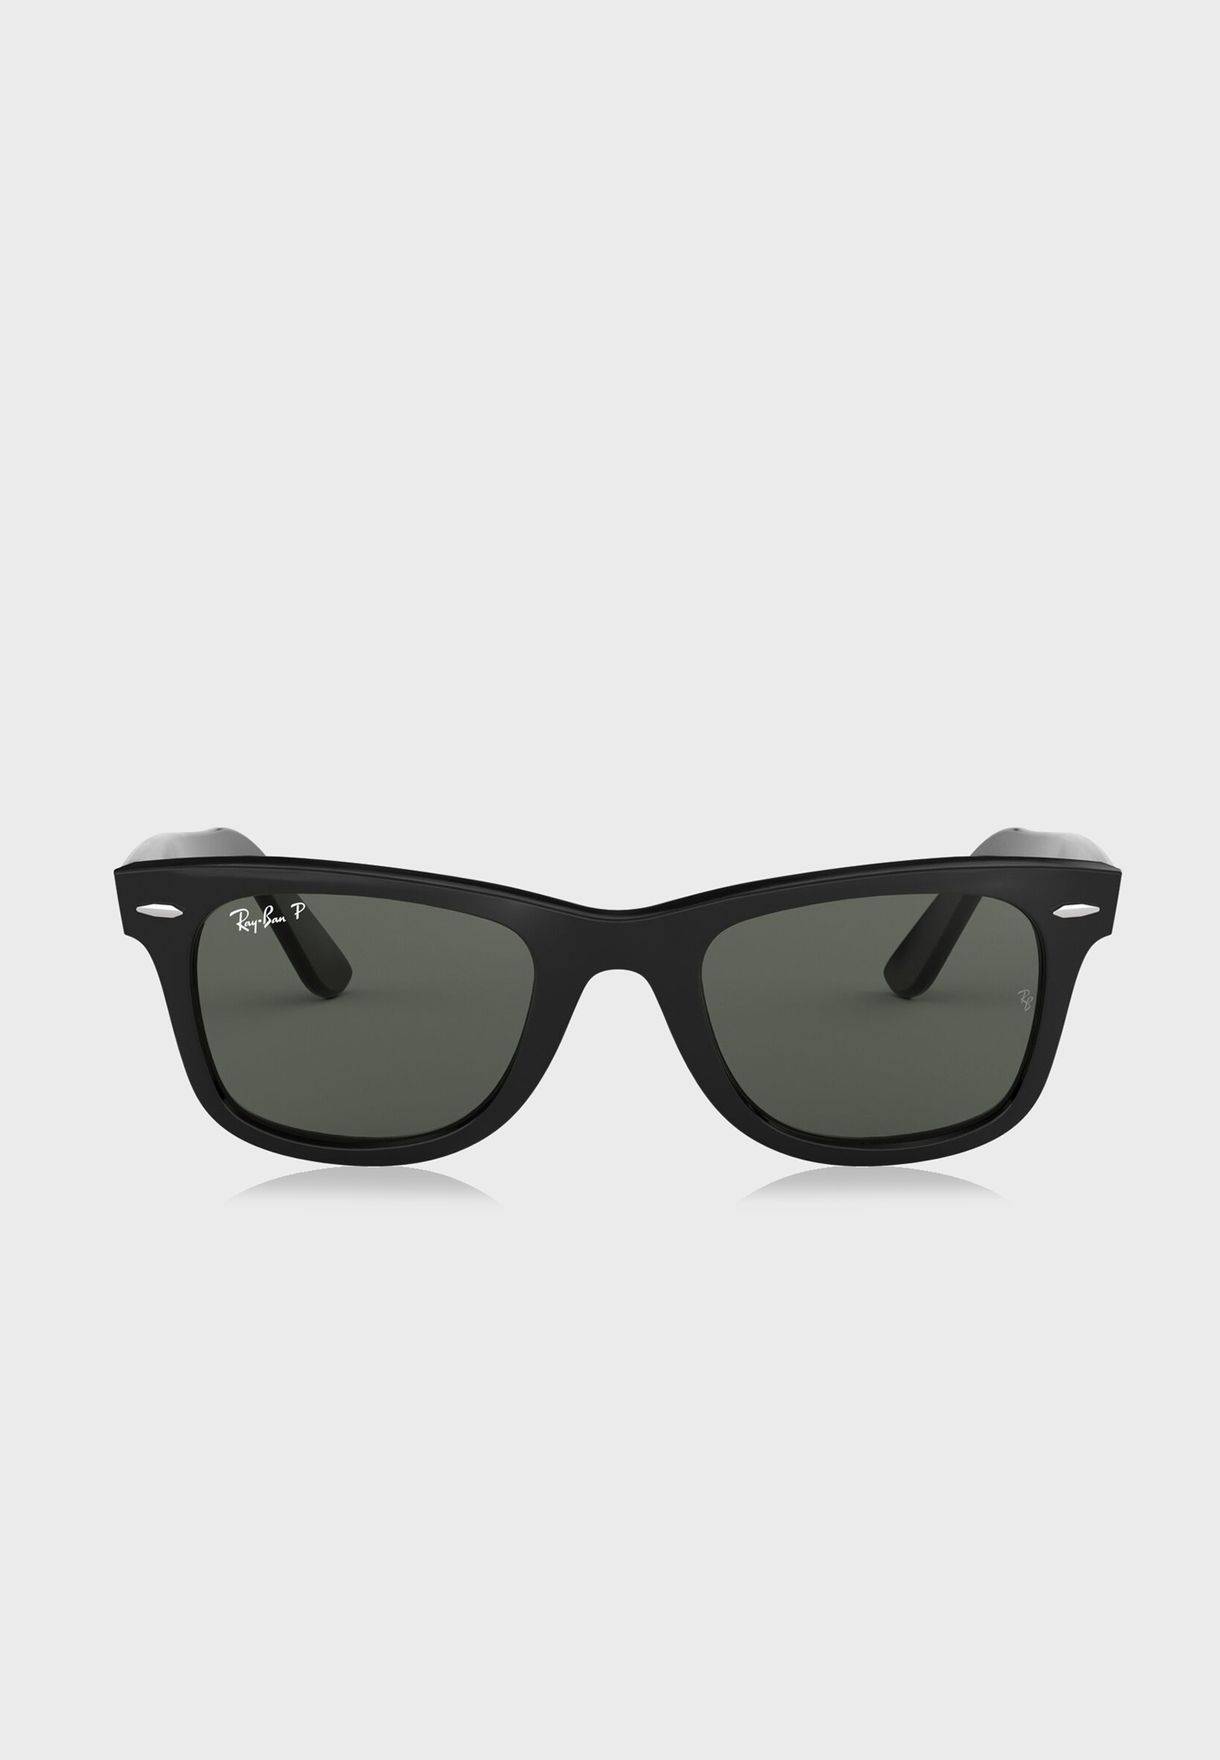 original ray ban sunglasses price in uae